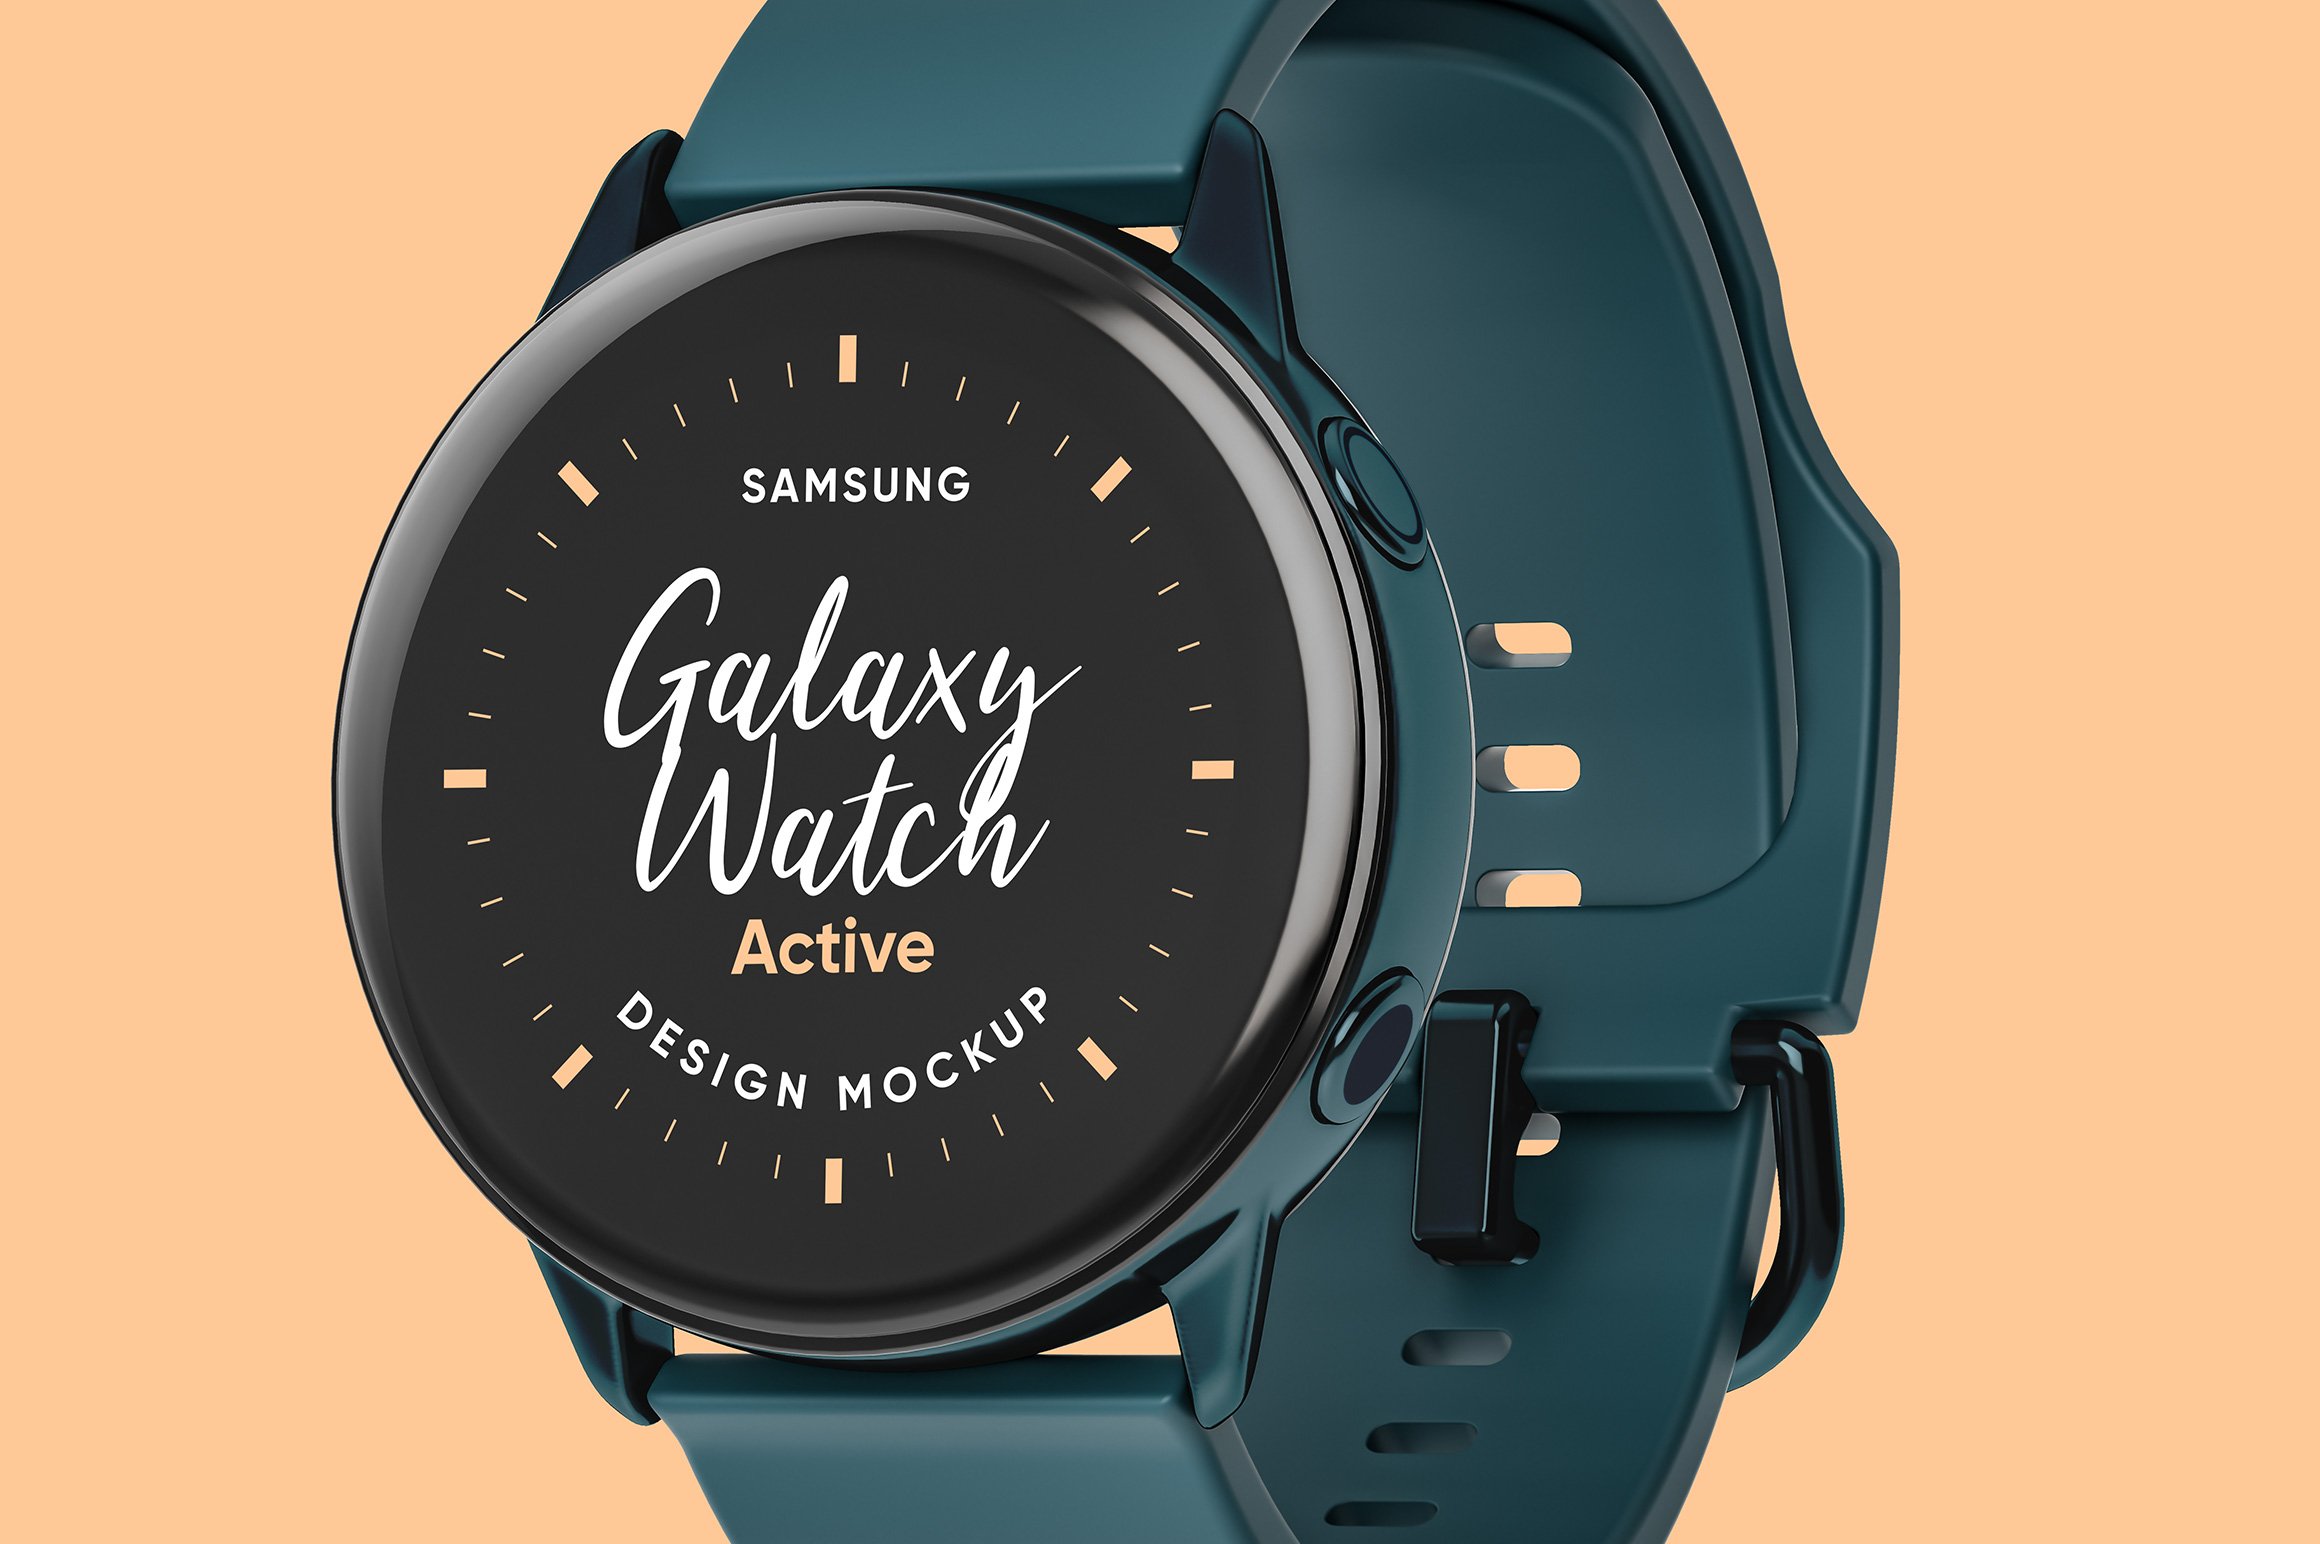 Samsung Galaxy Watch Design Mockup cover image.